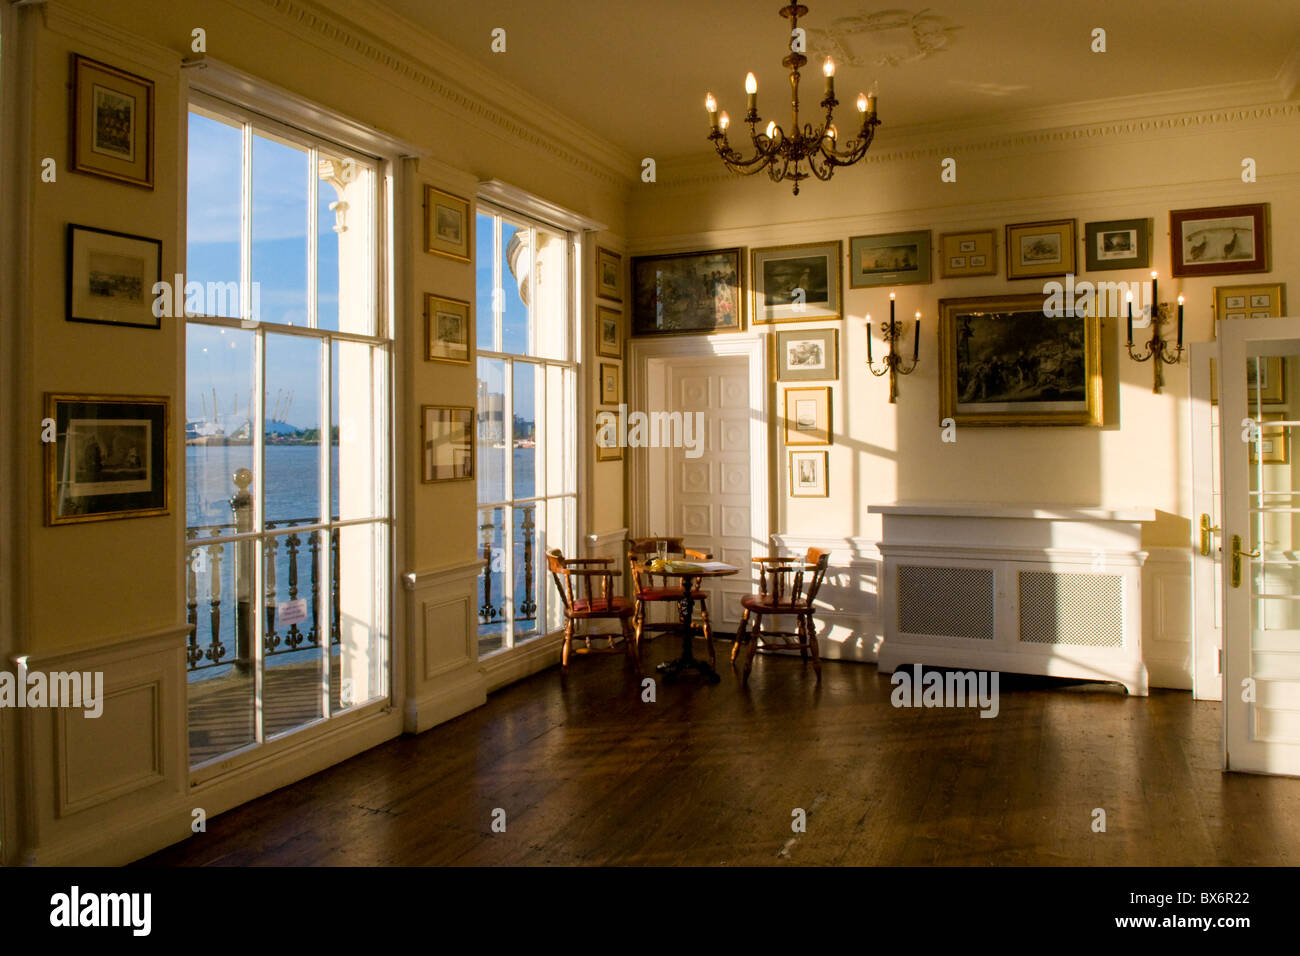 Interior of the Trafalgar Tavern in Greenwich Stock Photo